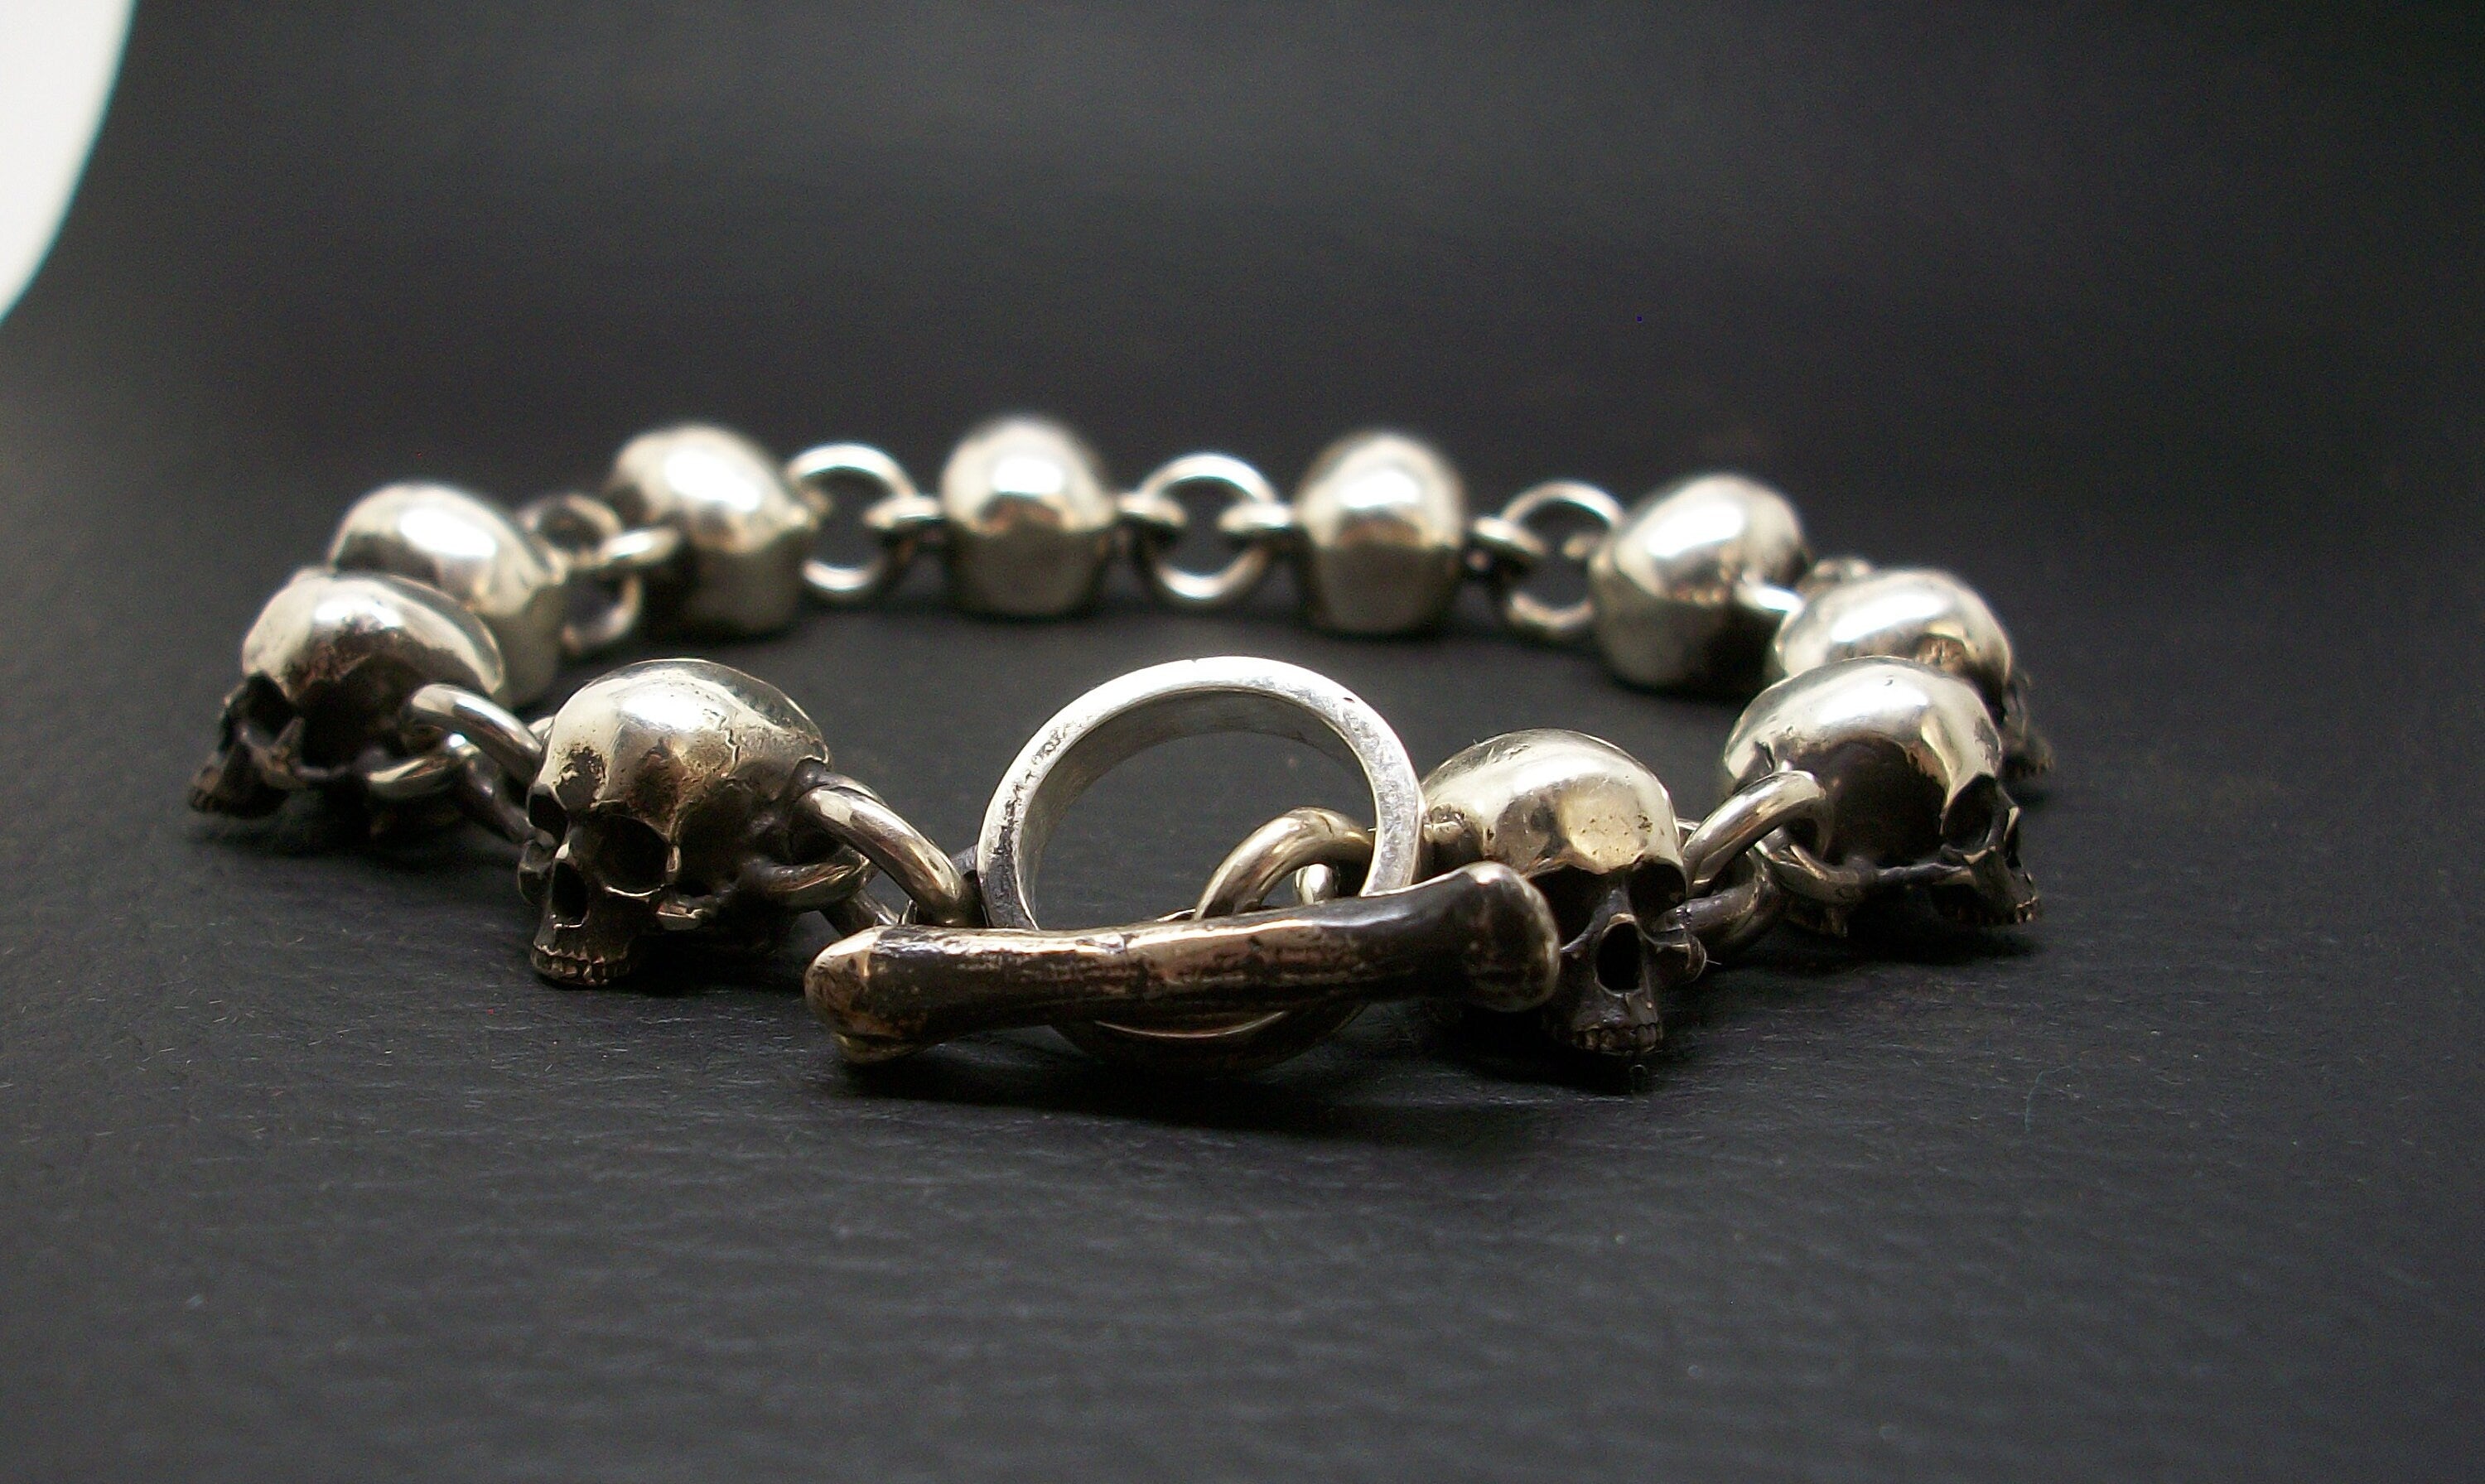 Skull Bracelet - Sterling Silver skull bracelet chain. Toggle bone closure.